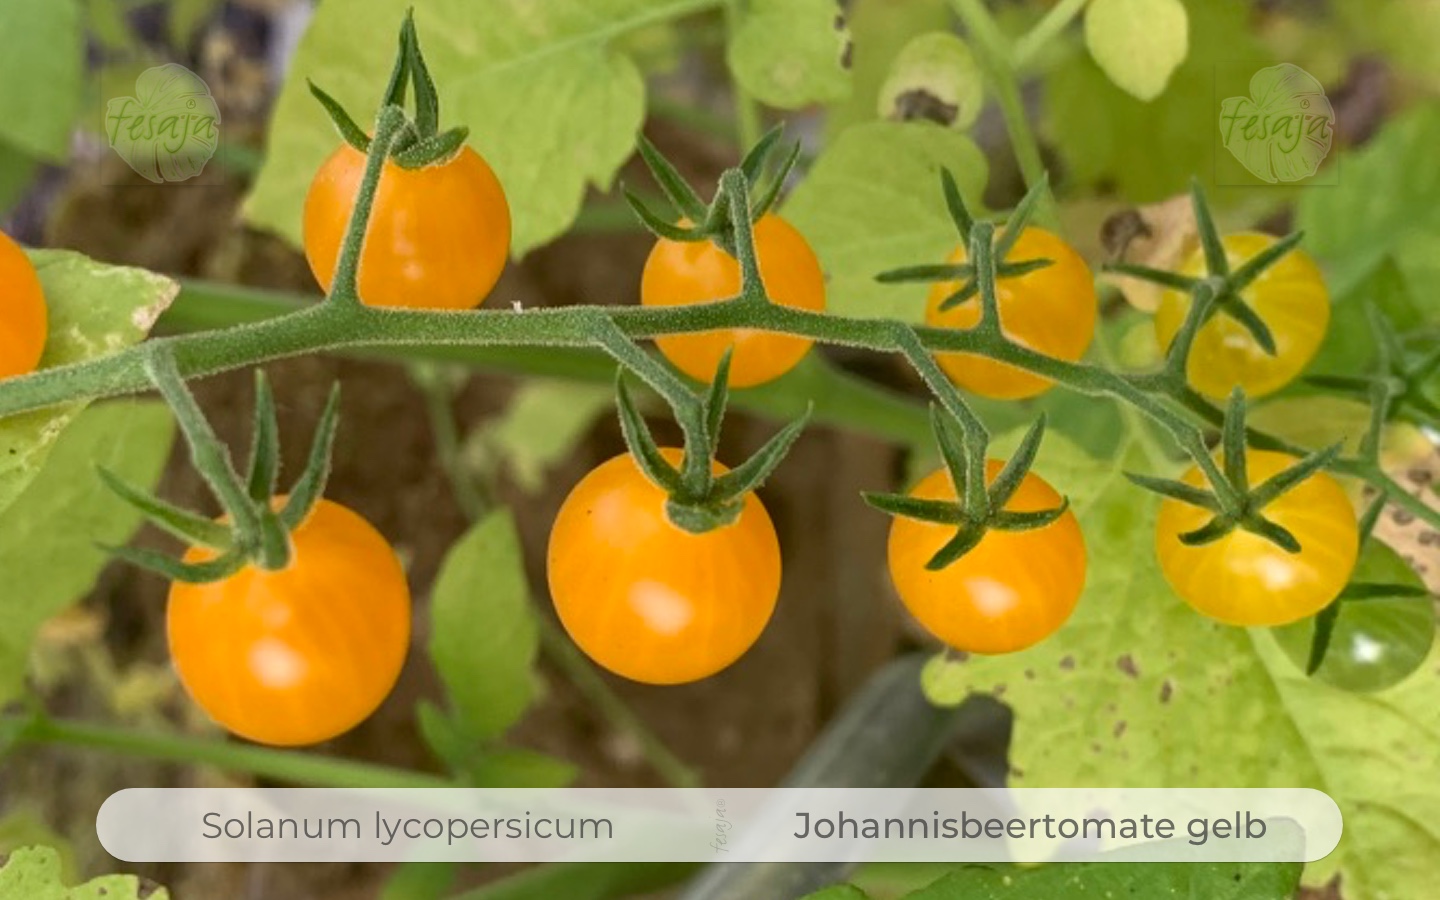 Johannisbeer-Tomate gelb  kleinste Tomate der Welt Wild Tomate 